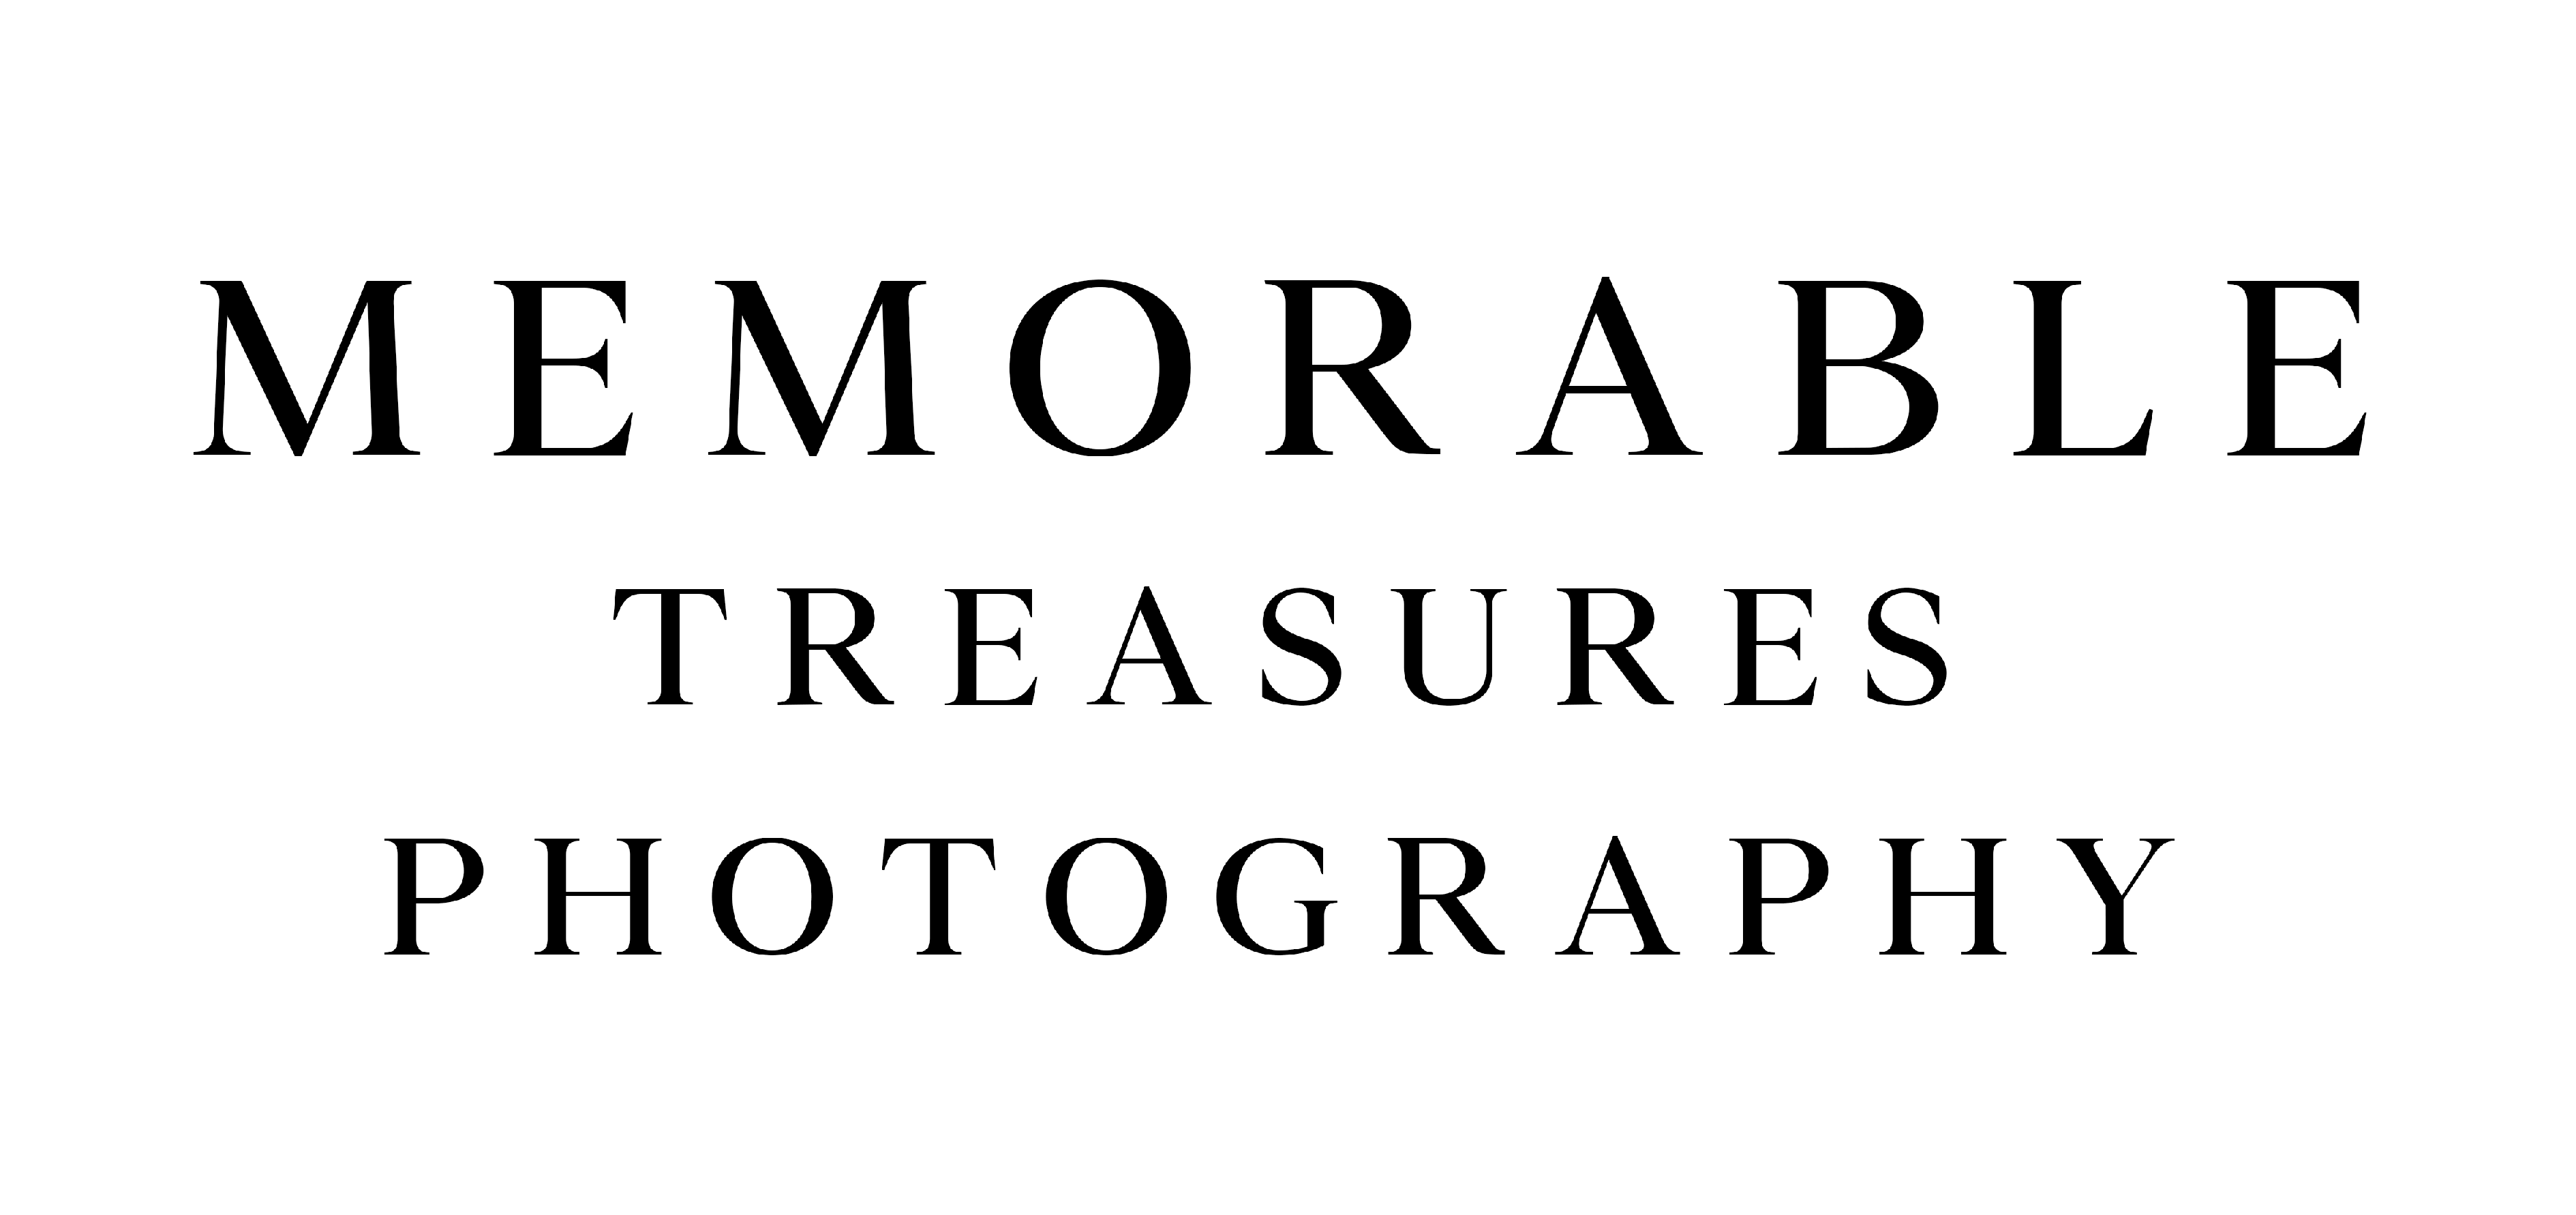 Memorable Treasures Photography